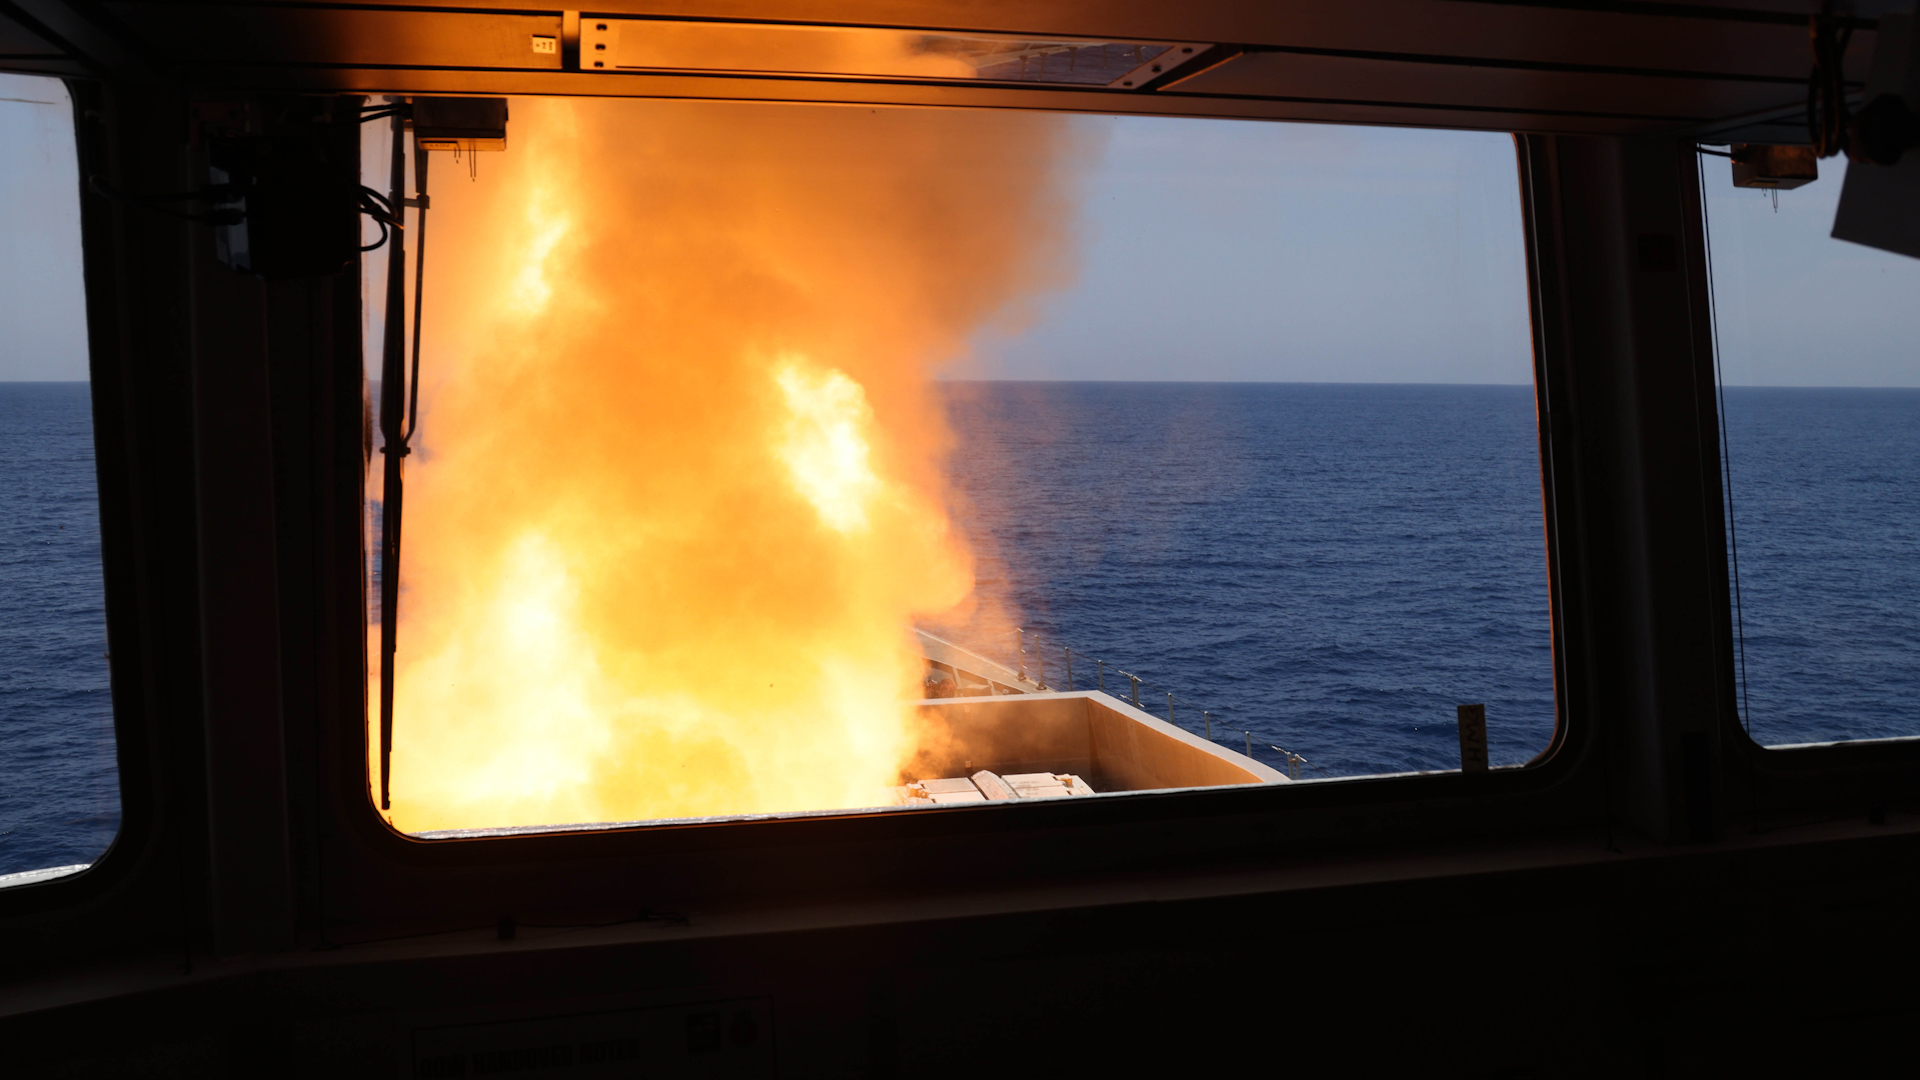 Royal Navy wardship HMS Diamond shoots down Yemen missile